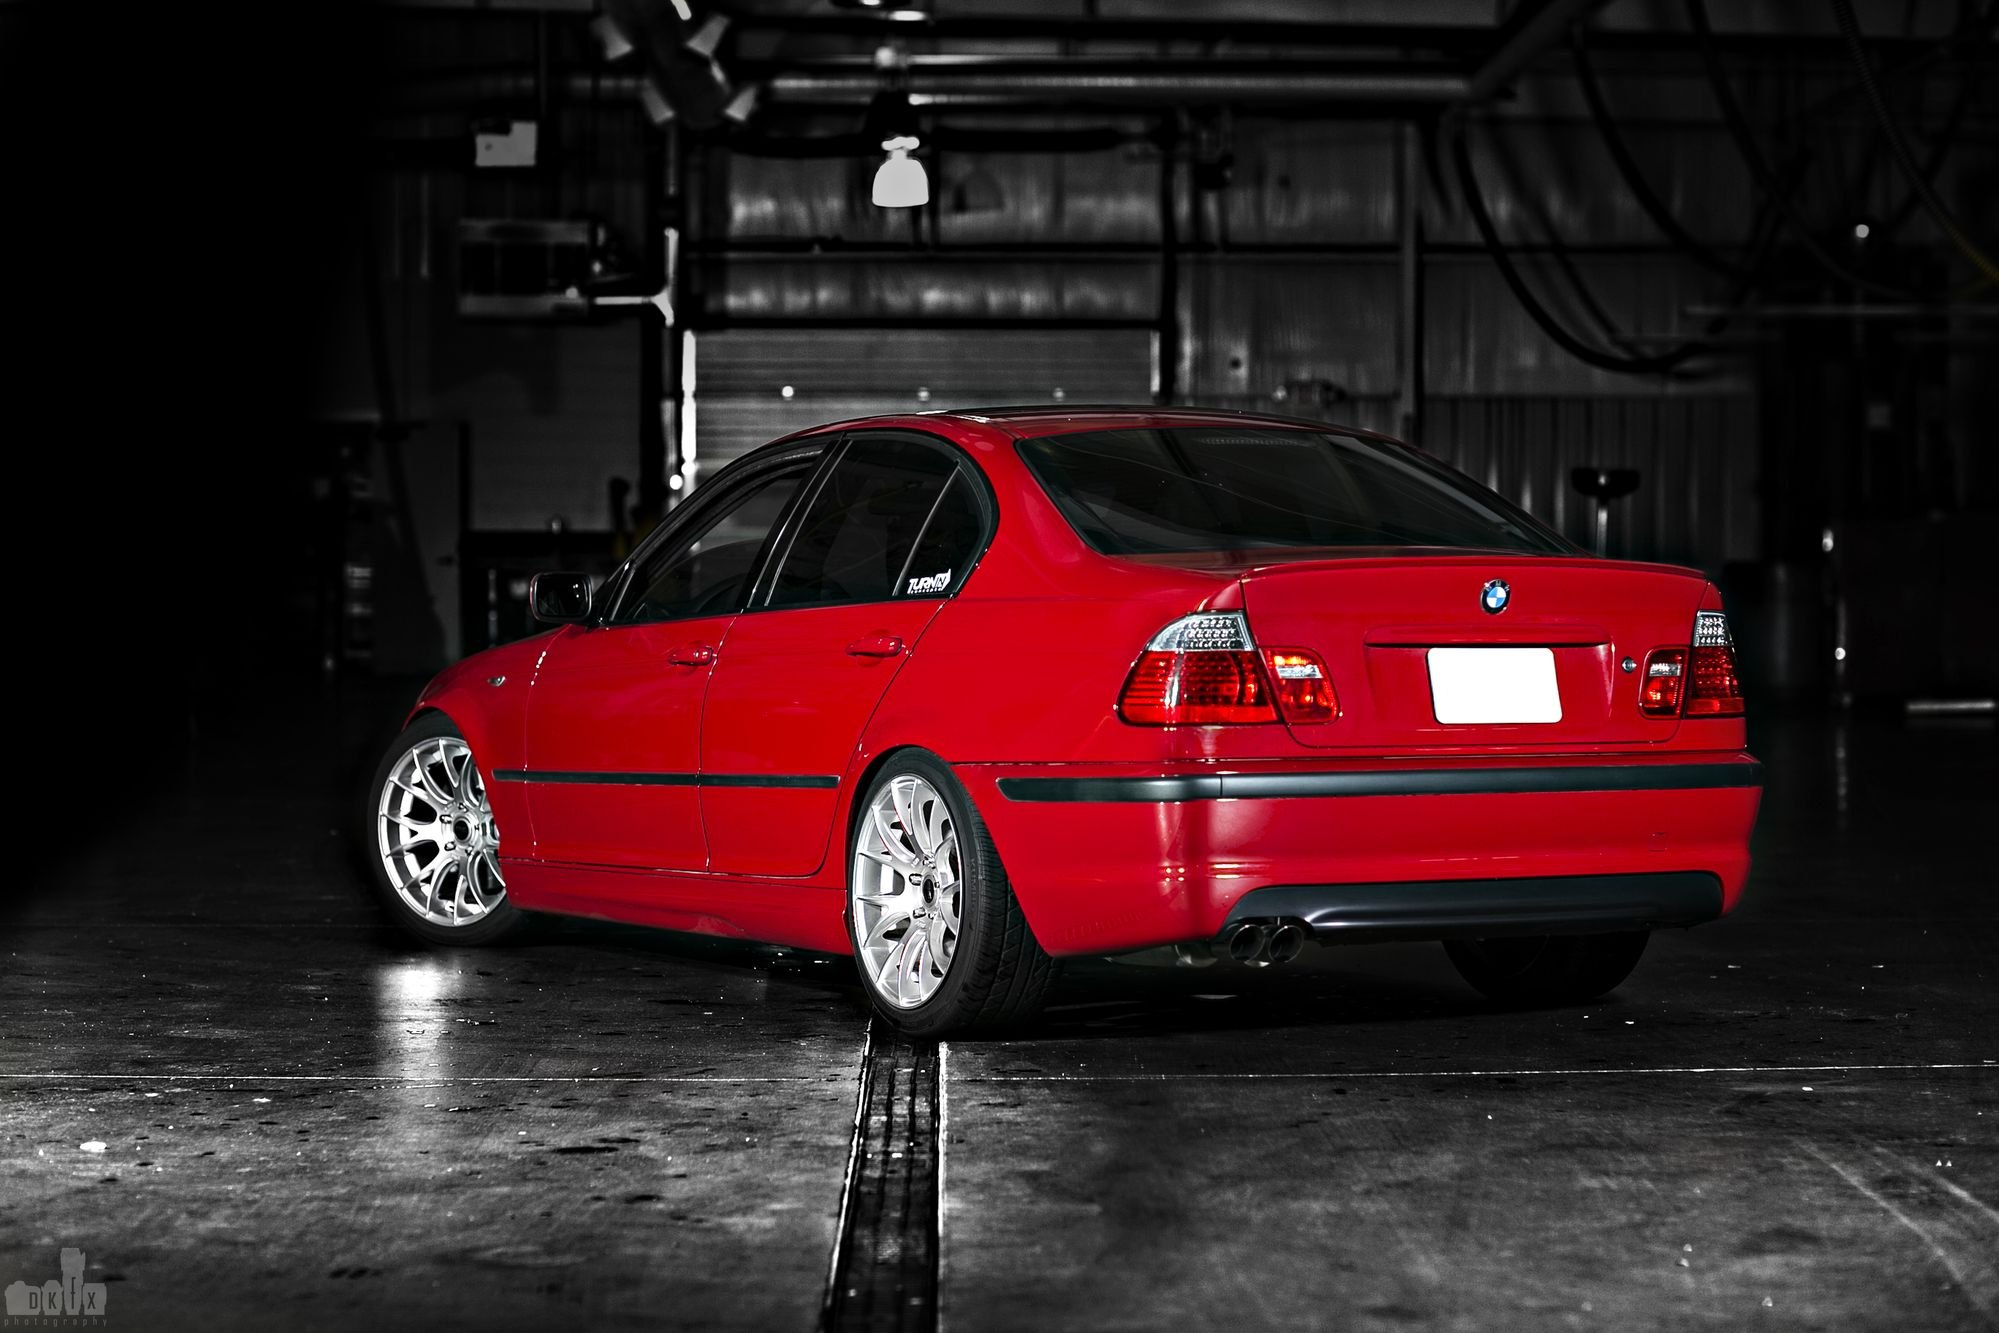 Custom Rear Diffuser on Red BMW 3-Series - Photo by dan kinzie